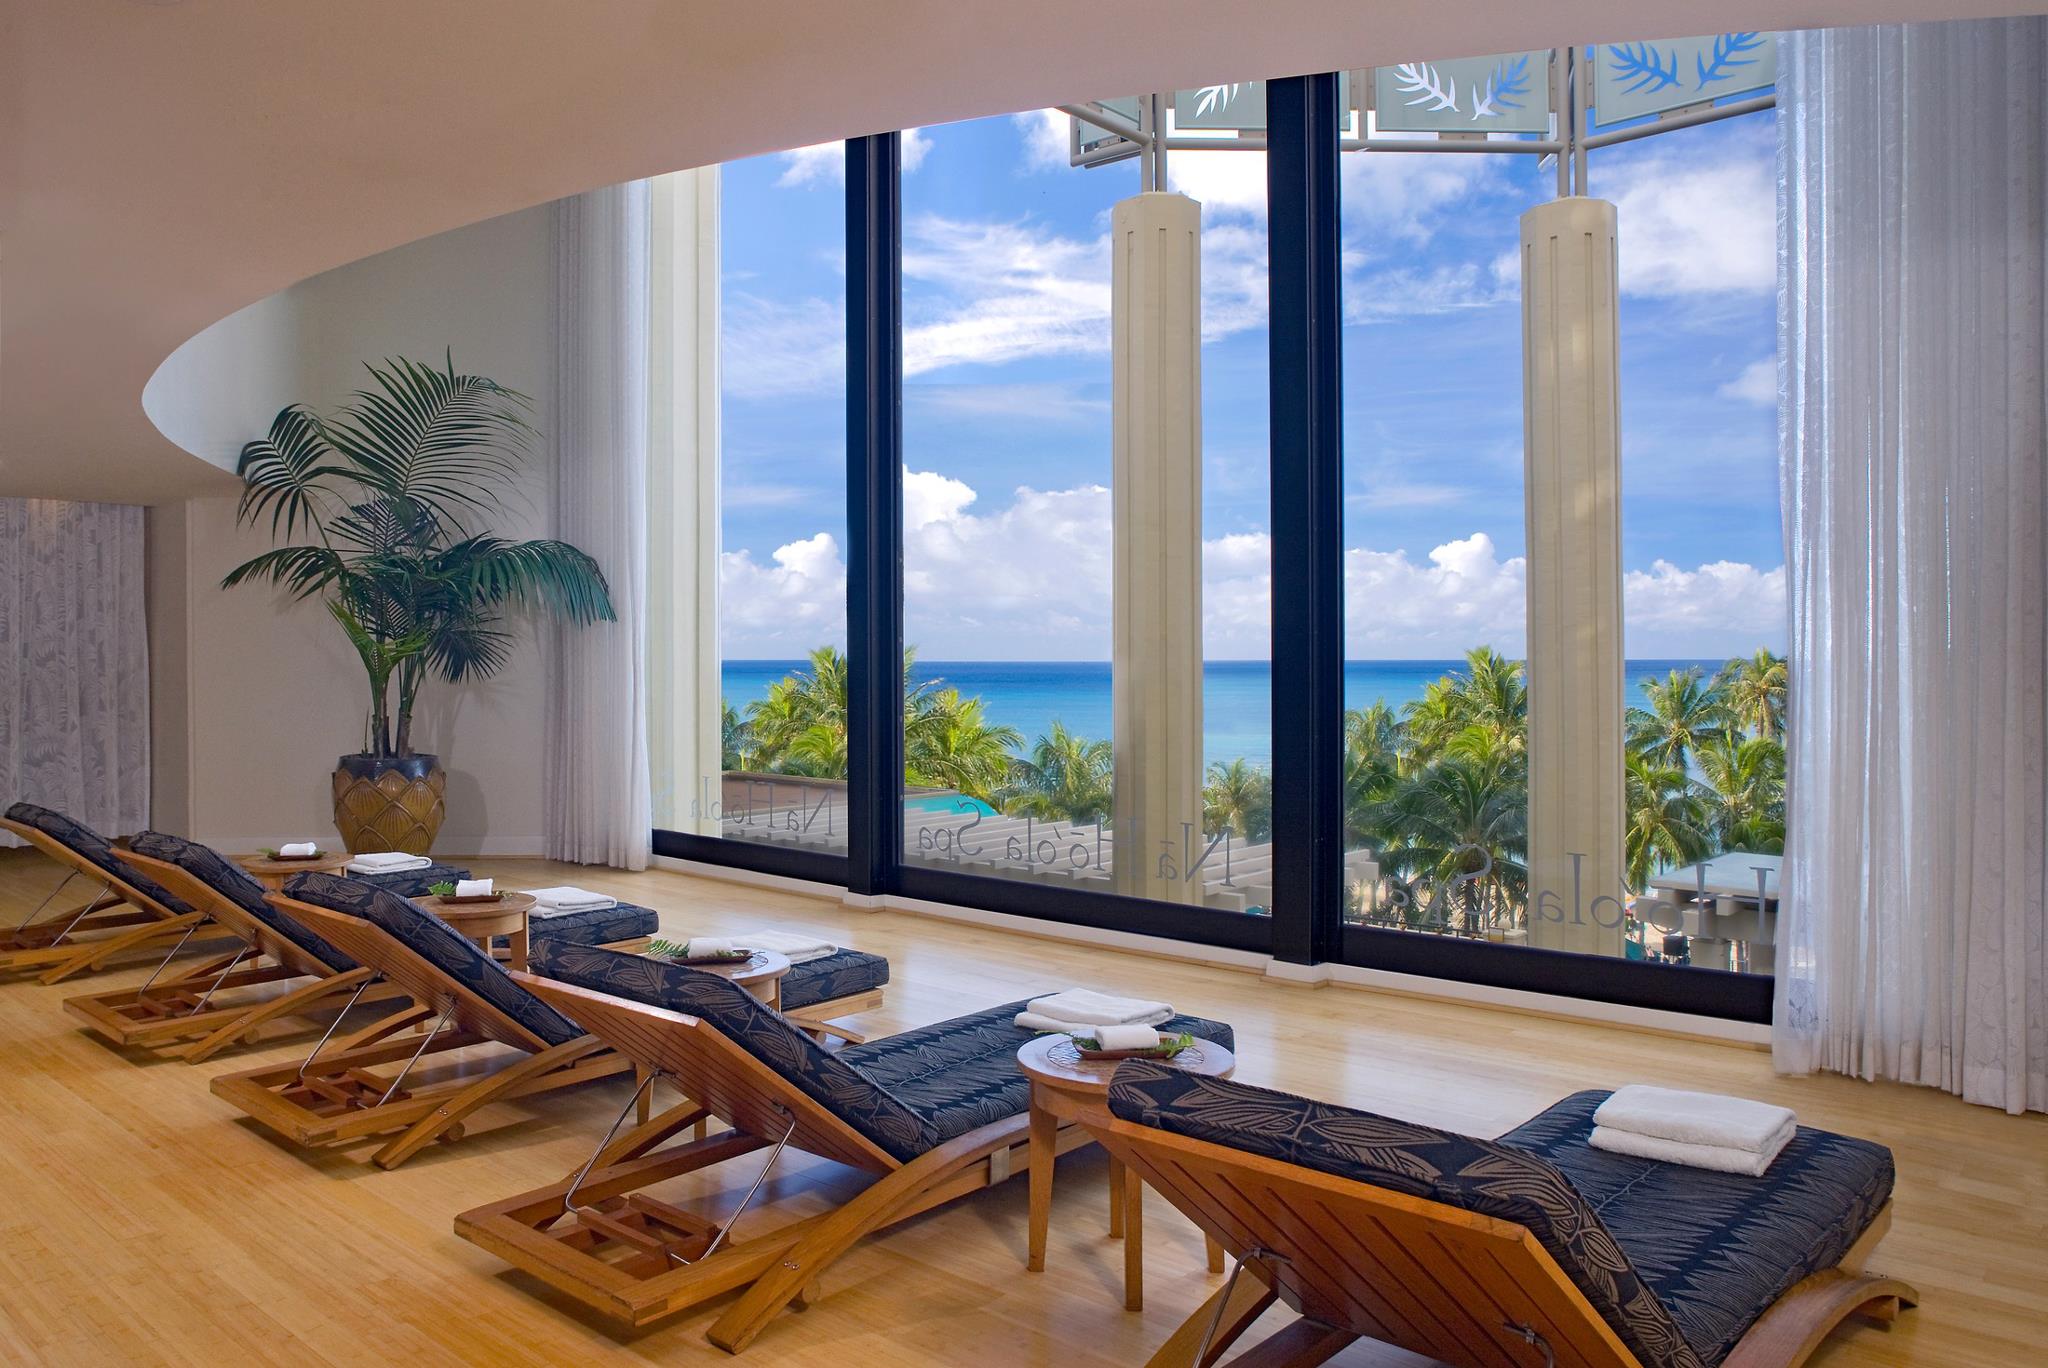 Hyatt Regency Waikiki Beach Resort and Spa